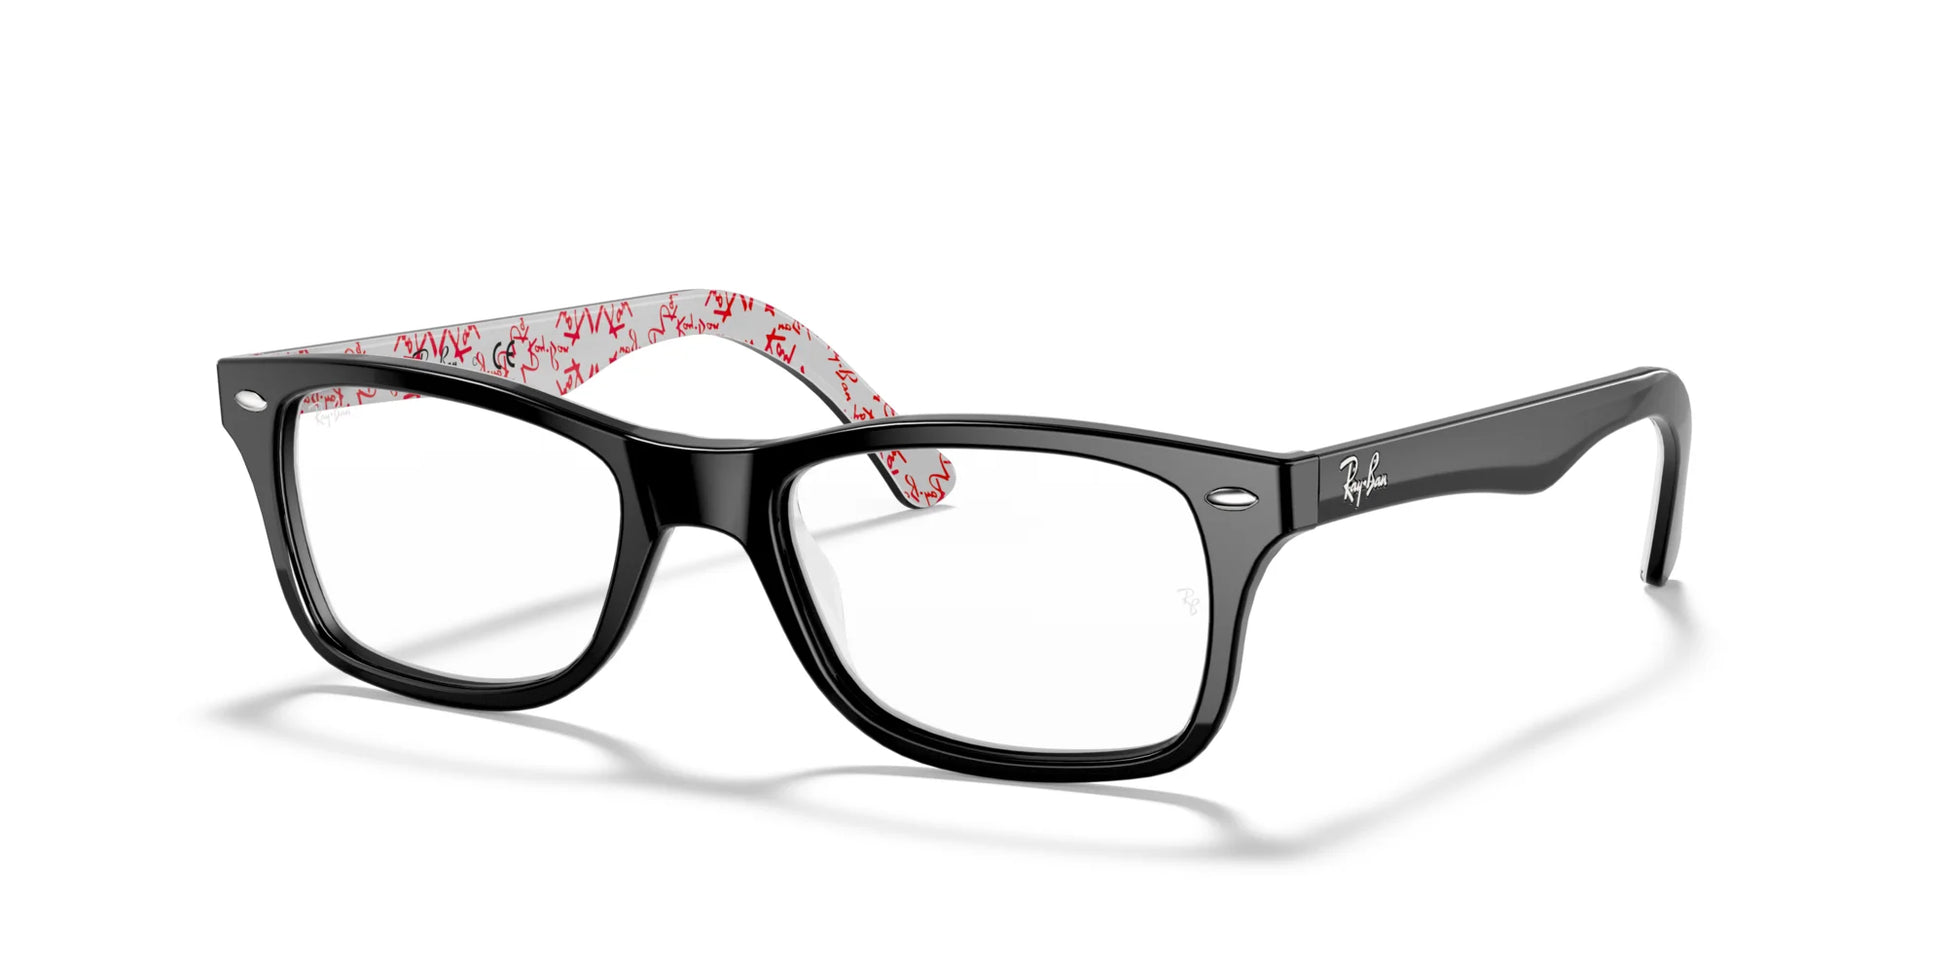 Ray-Ban RX5228 Eyeglasses Black On White / Clear